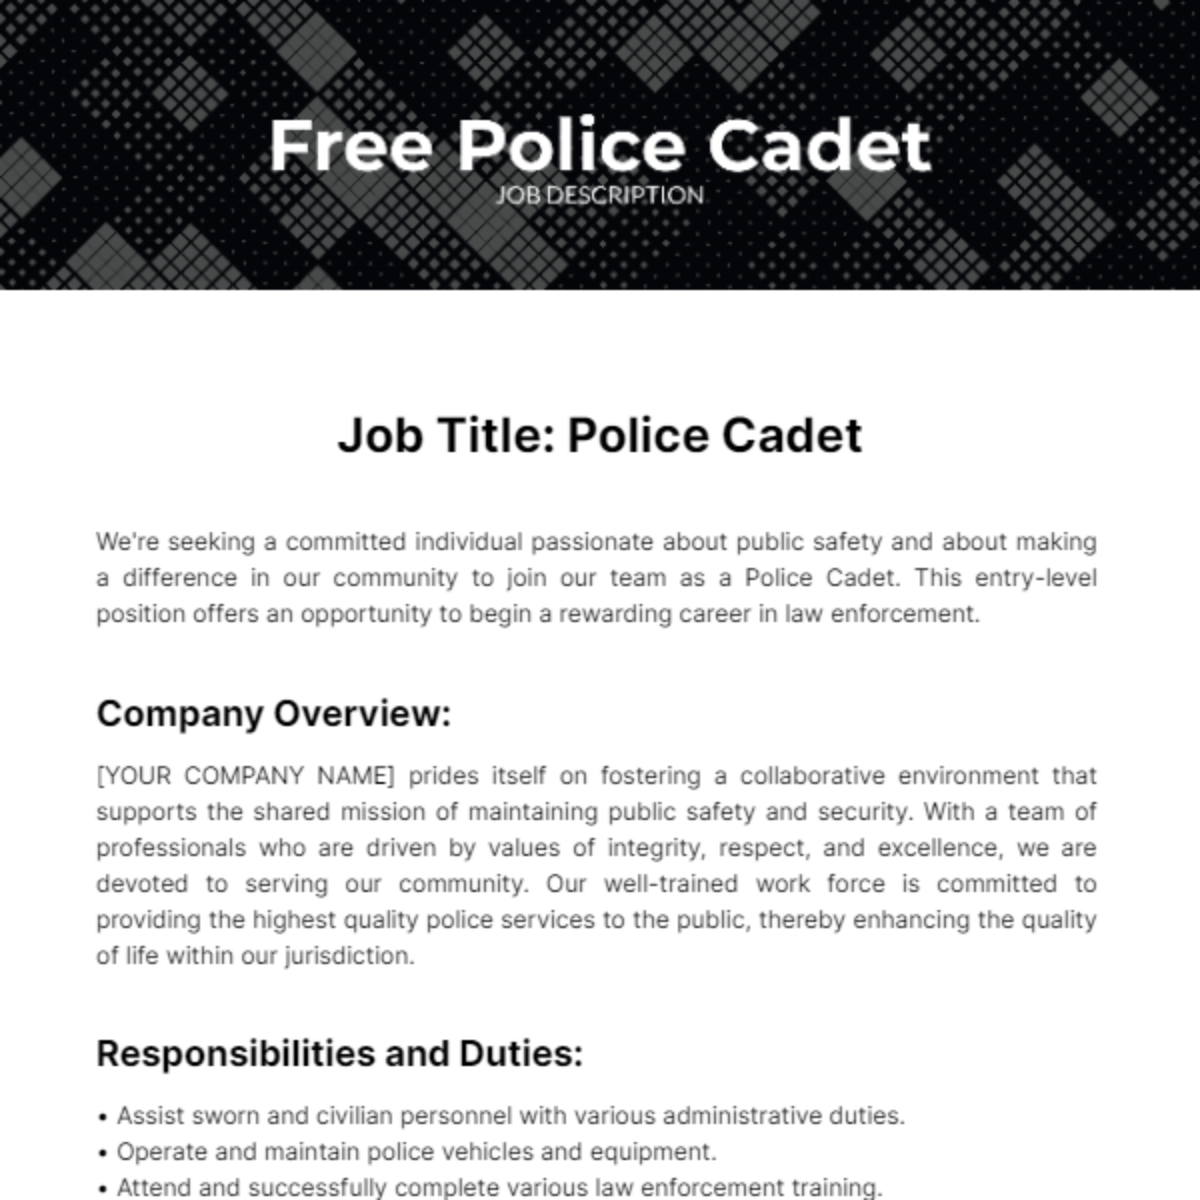 Police Cadet Job Description Template